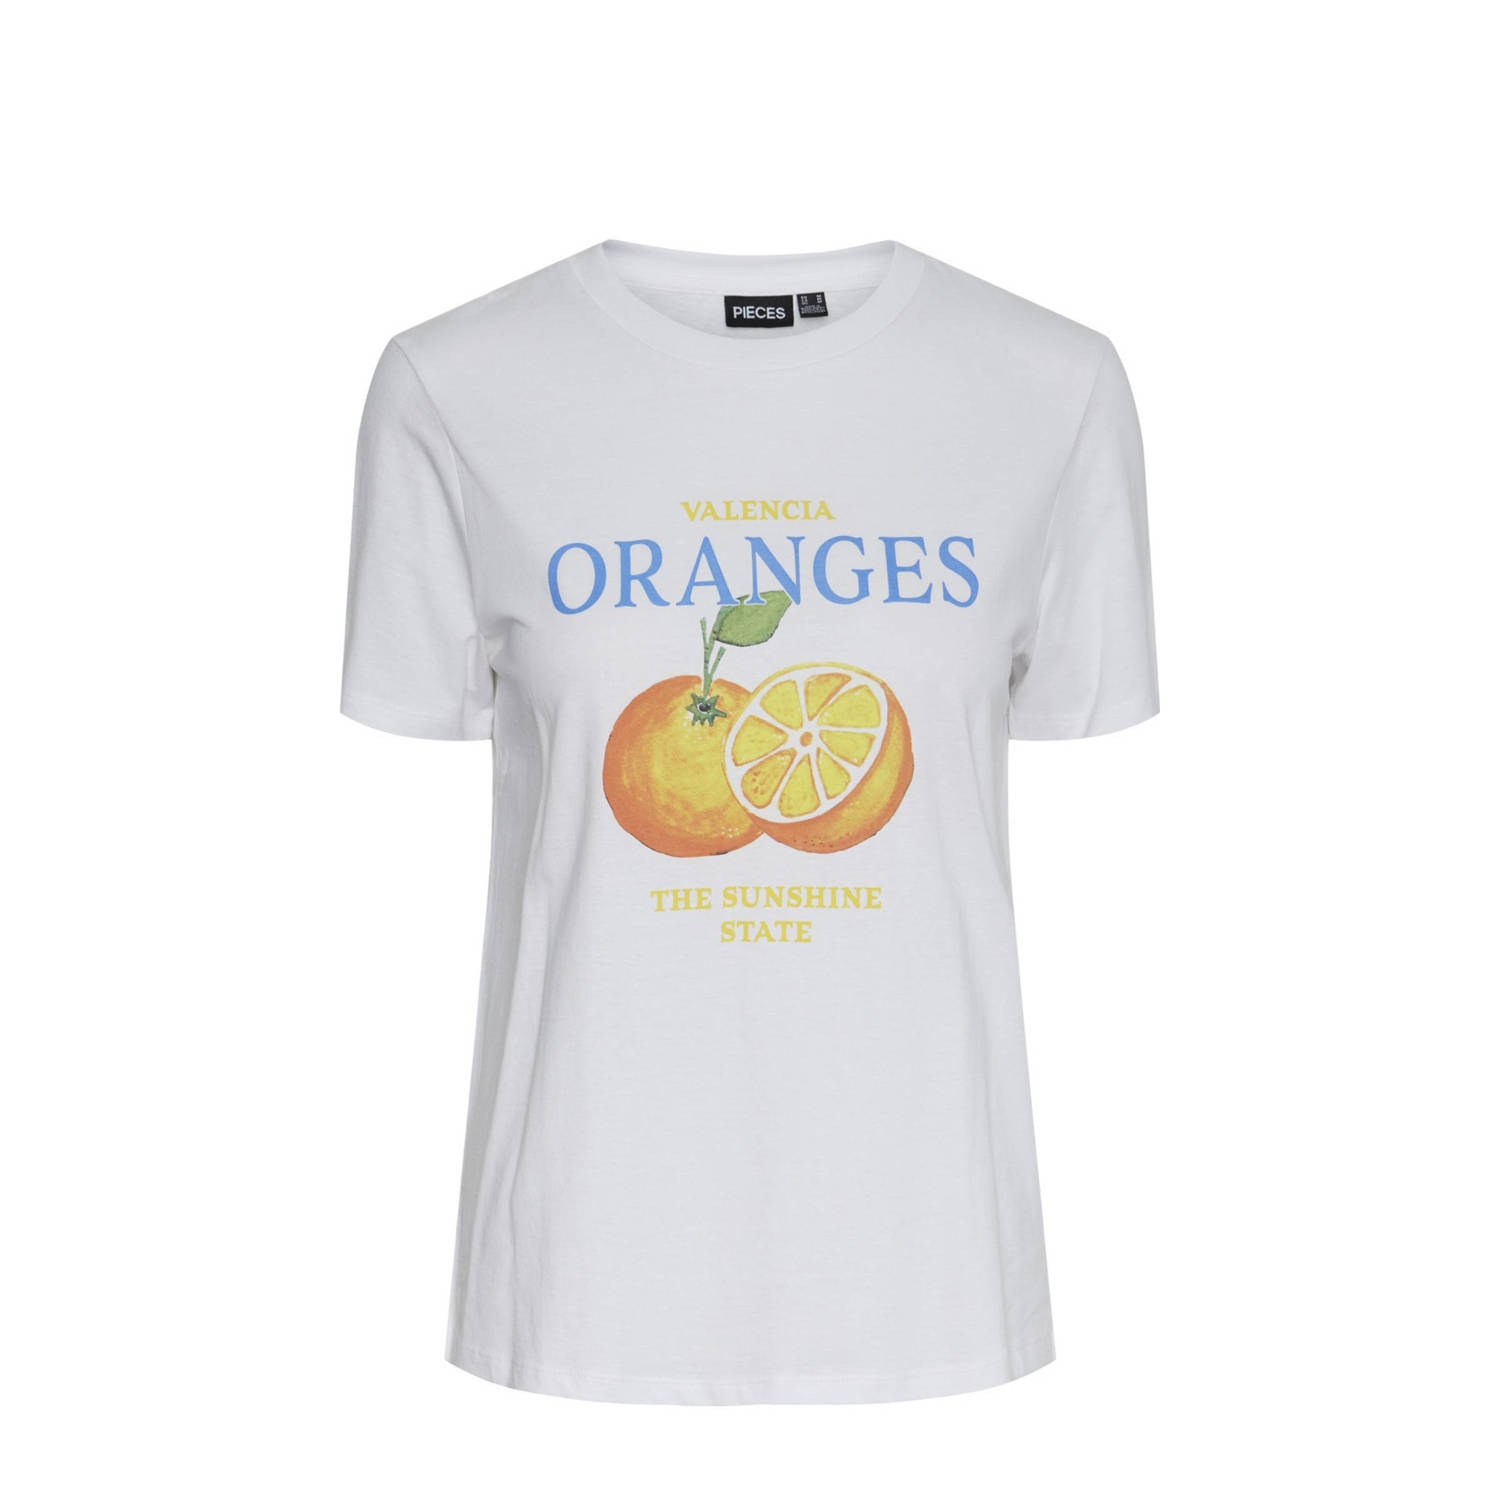 PIECES T-shirt met printopdruk wit oranje